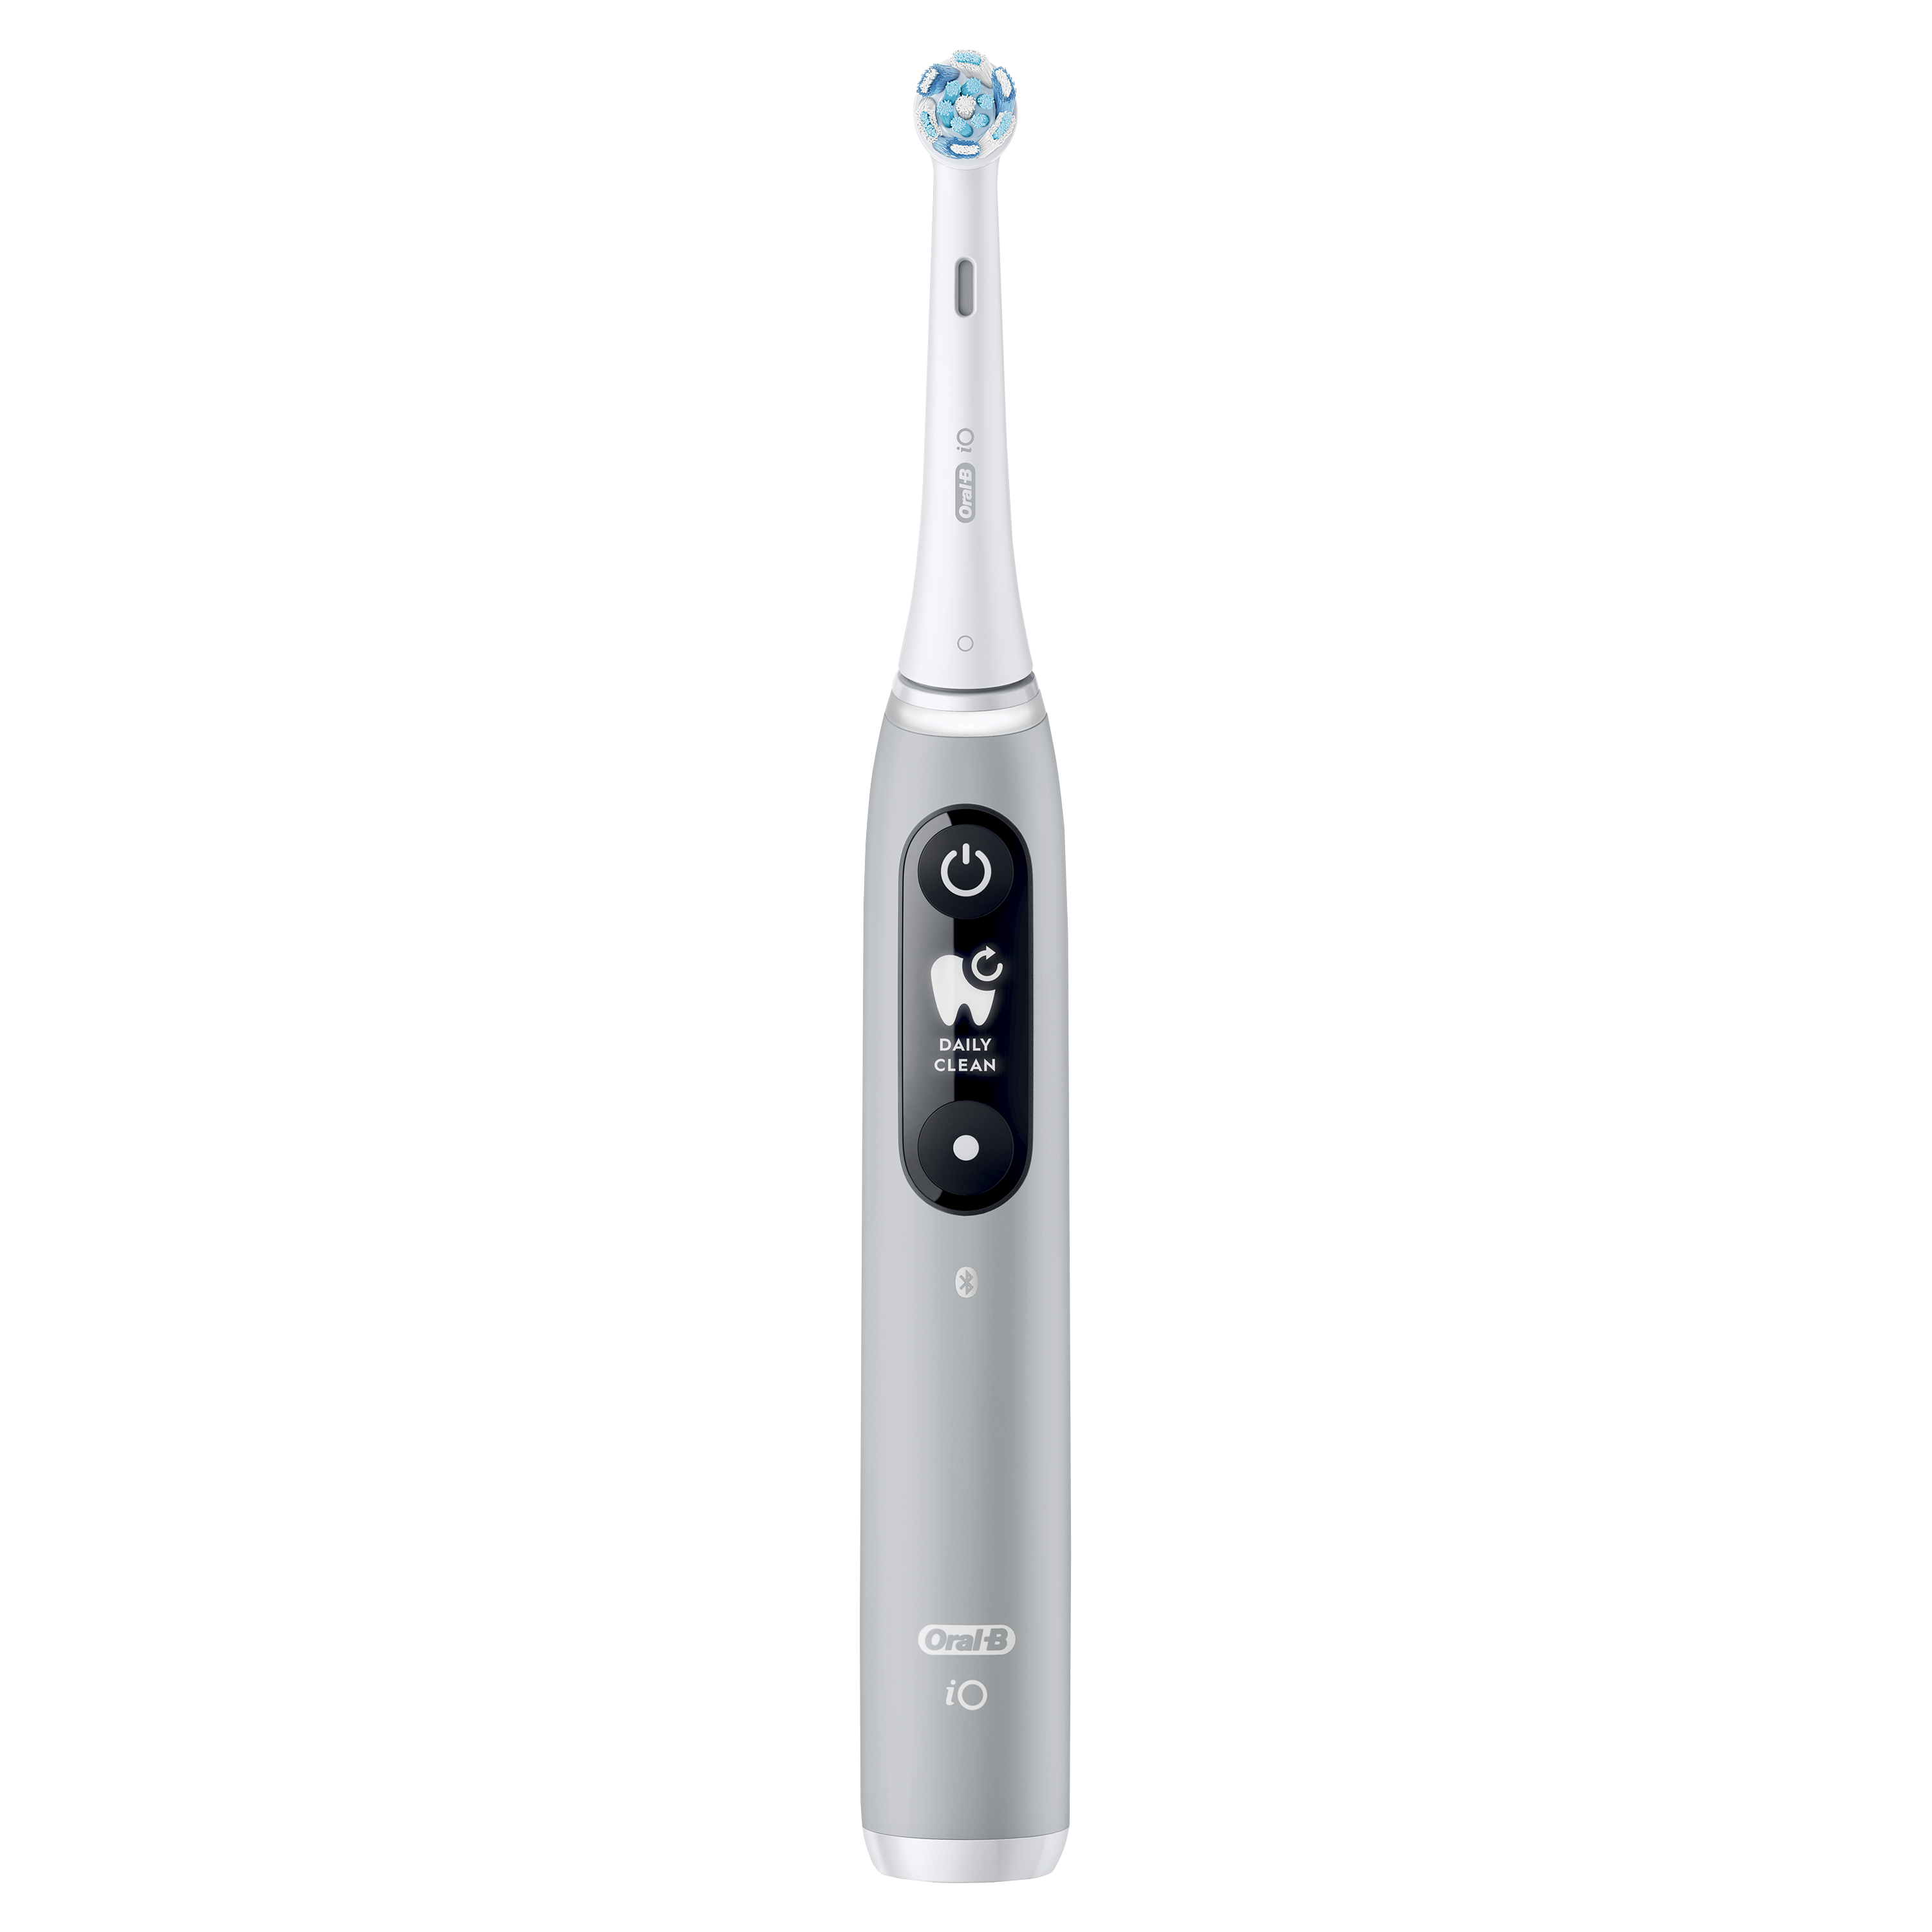 crest-oral-b-io-gingivitis-electric-toothbrush-system